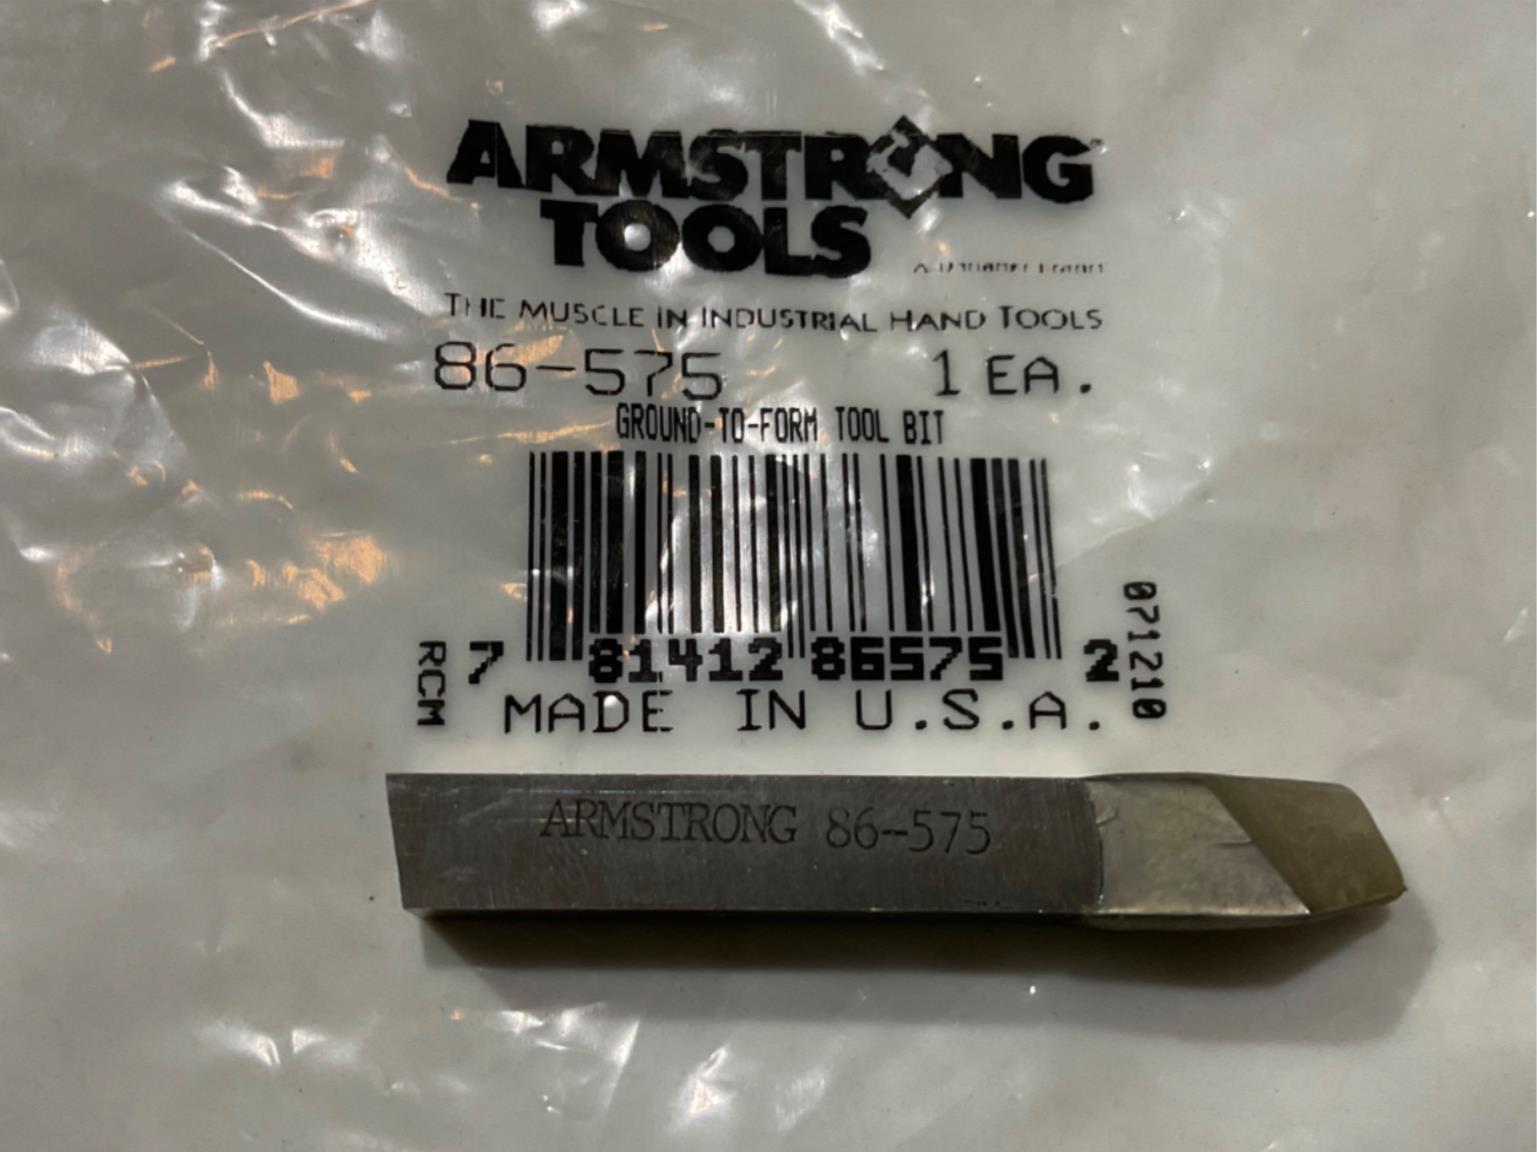 Armstrong 86-575 Ground-to-form Tool Bit USA